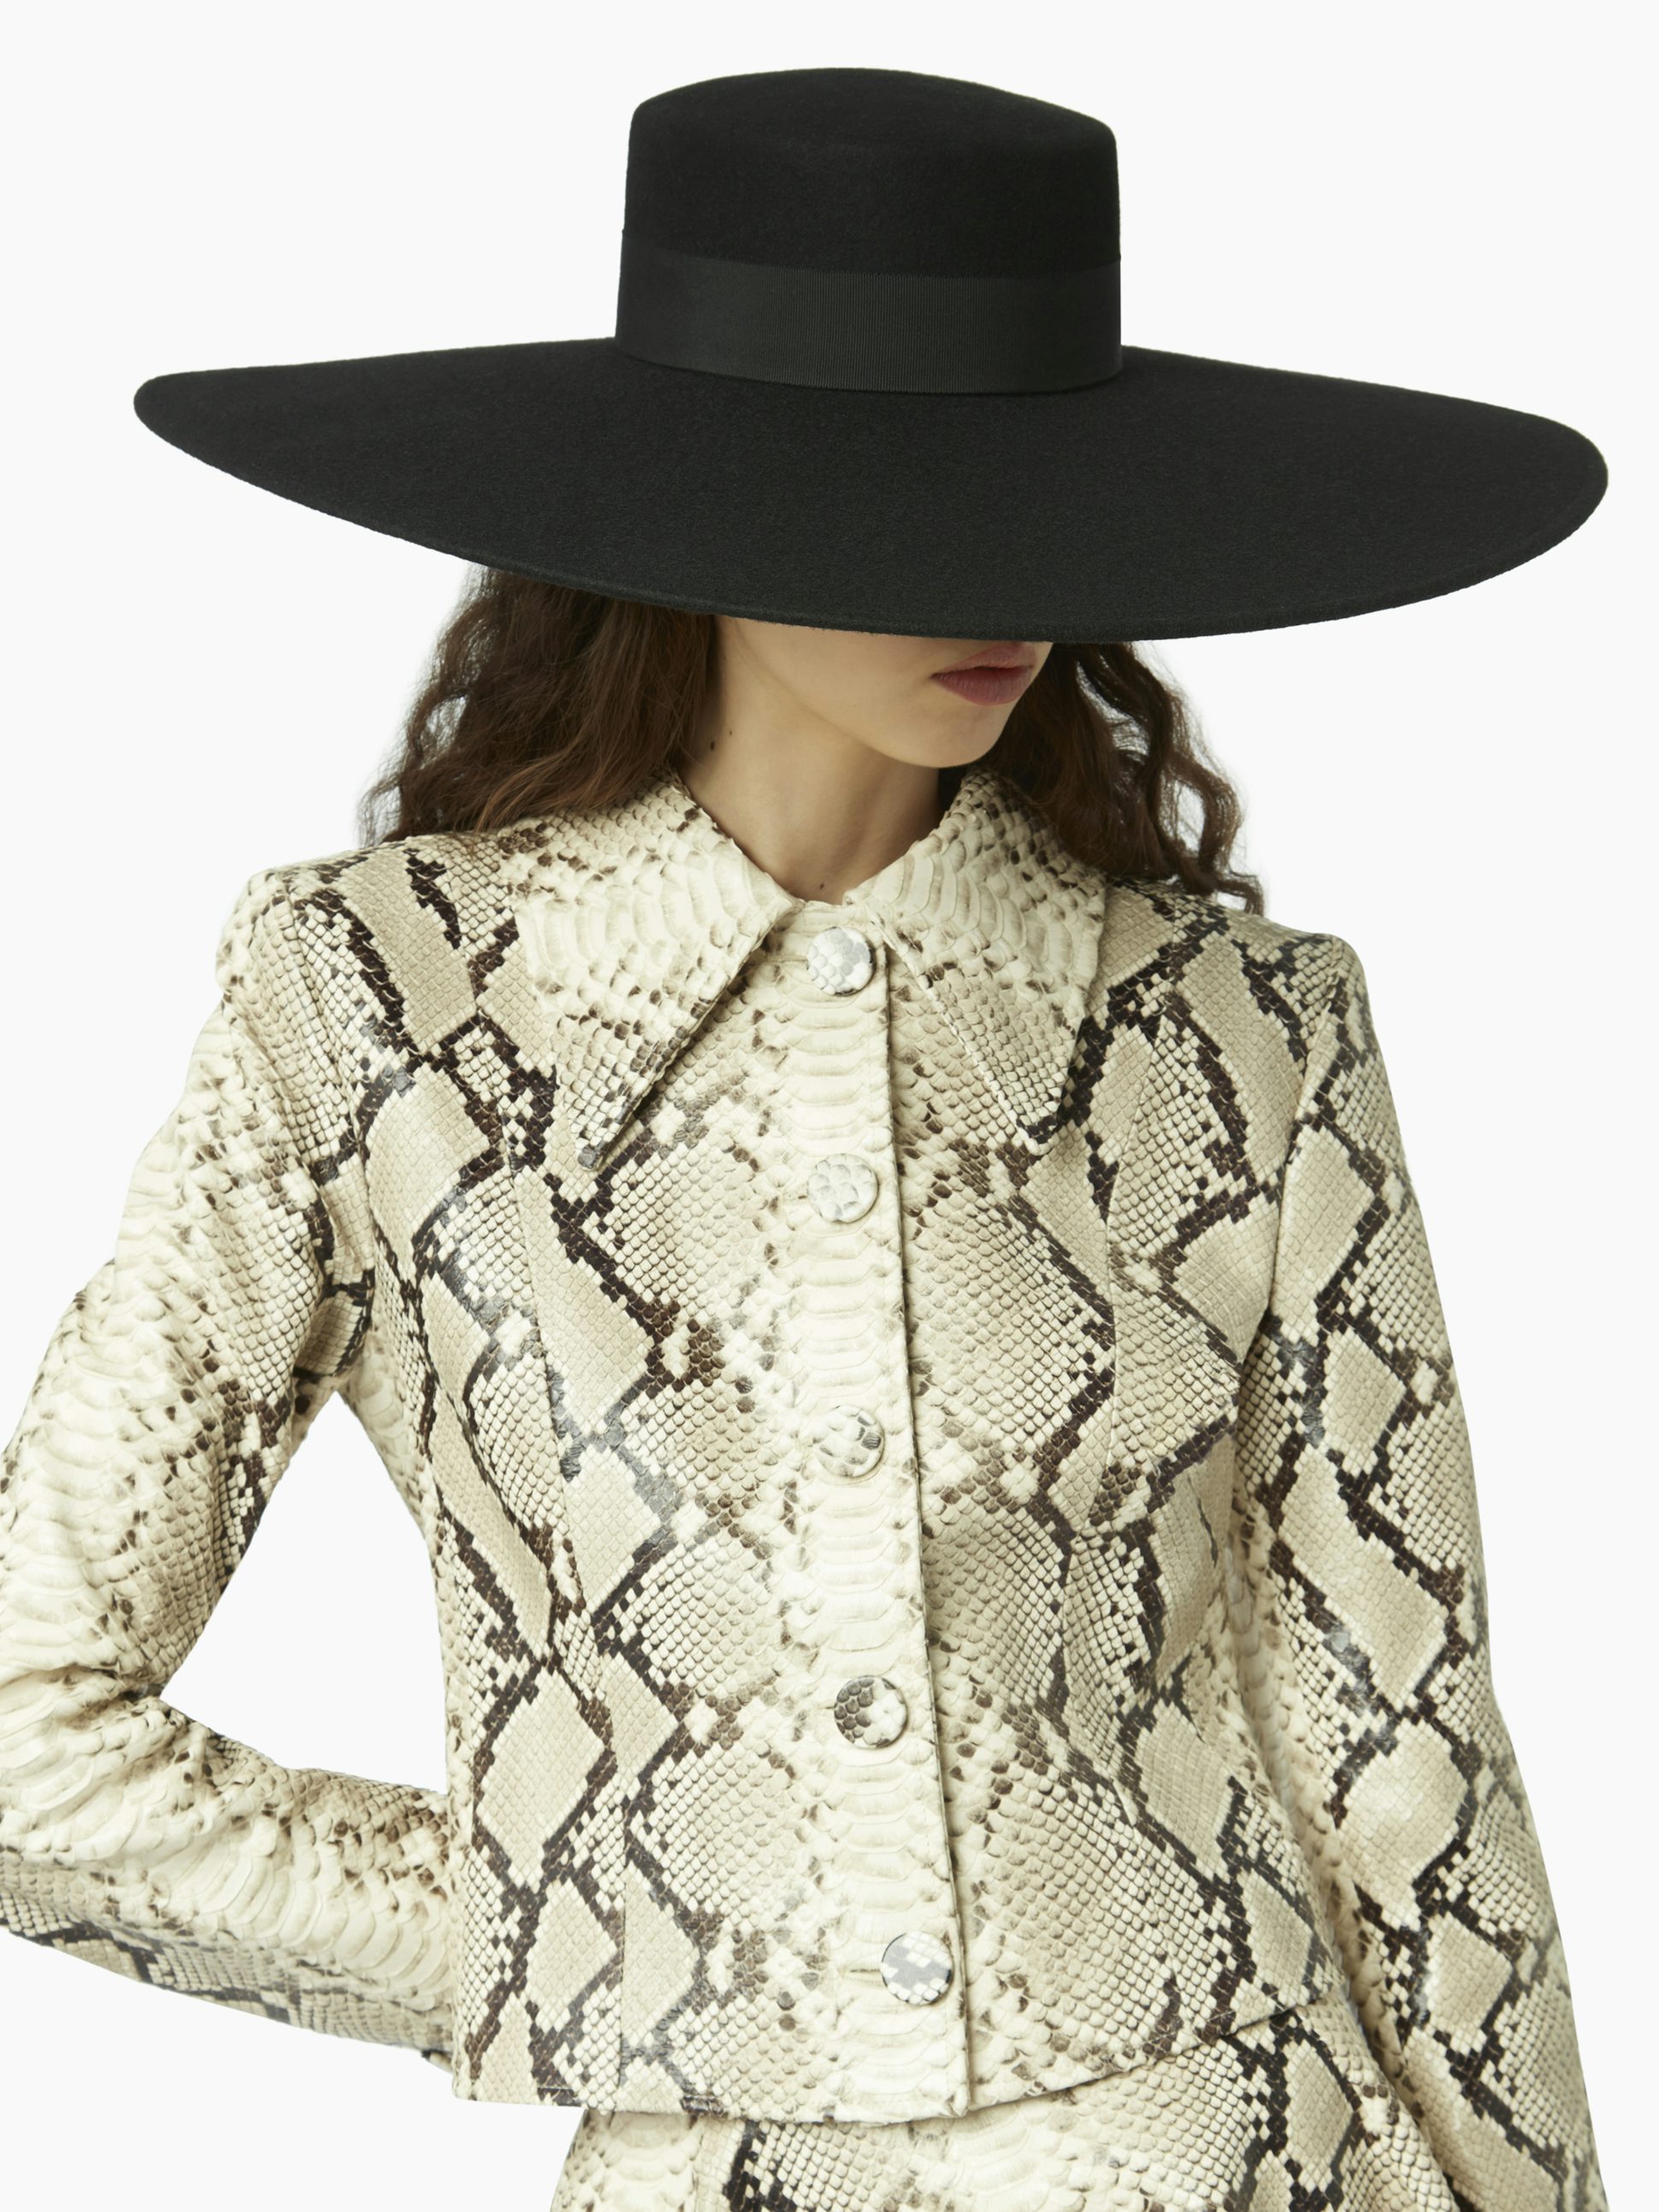 Felt wool capeline hat in black - Nina Ricci